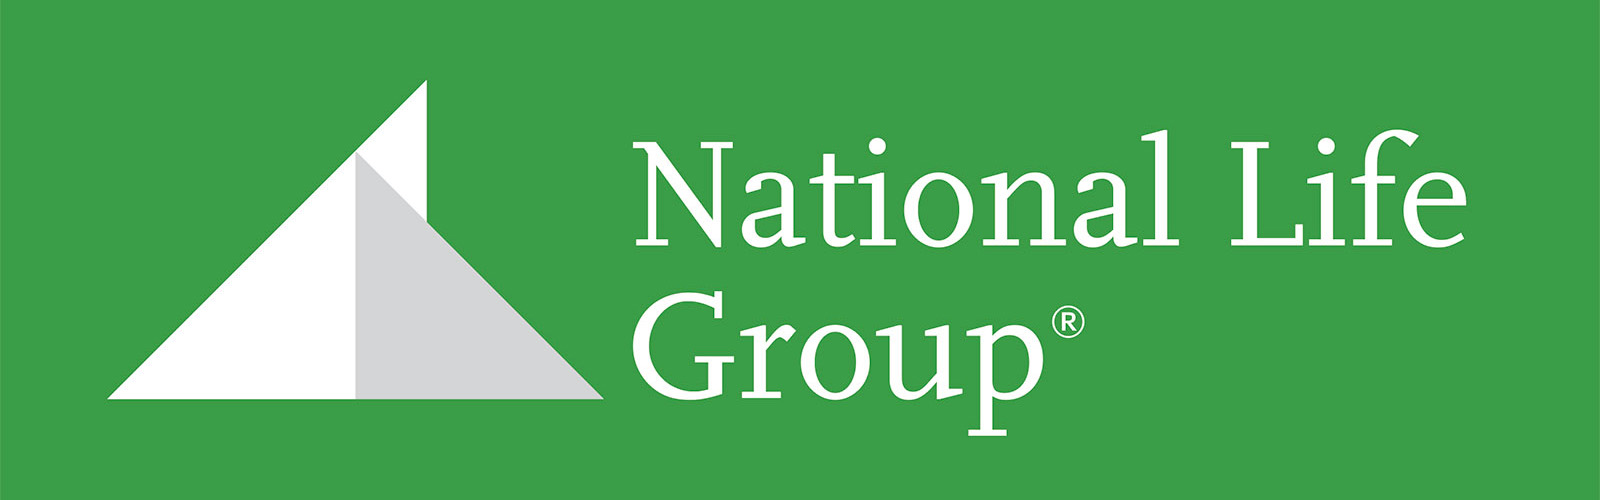 2018_NationalLife-logo-web-KO-ongreen500